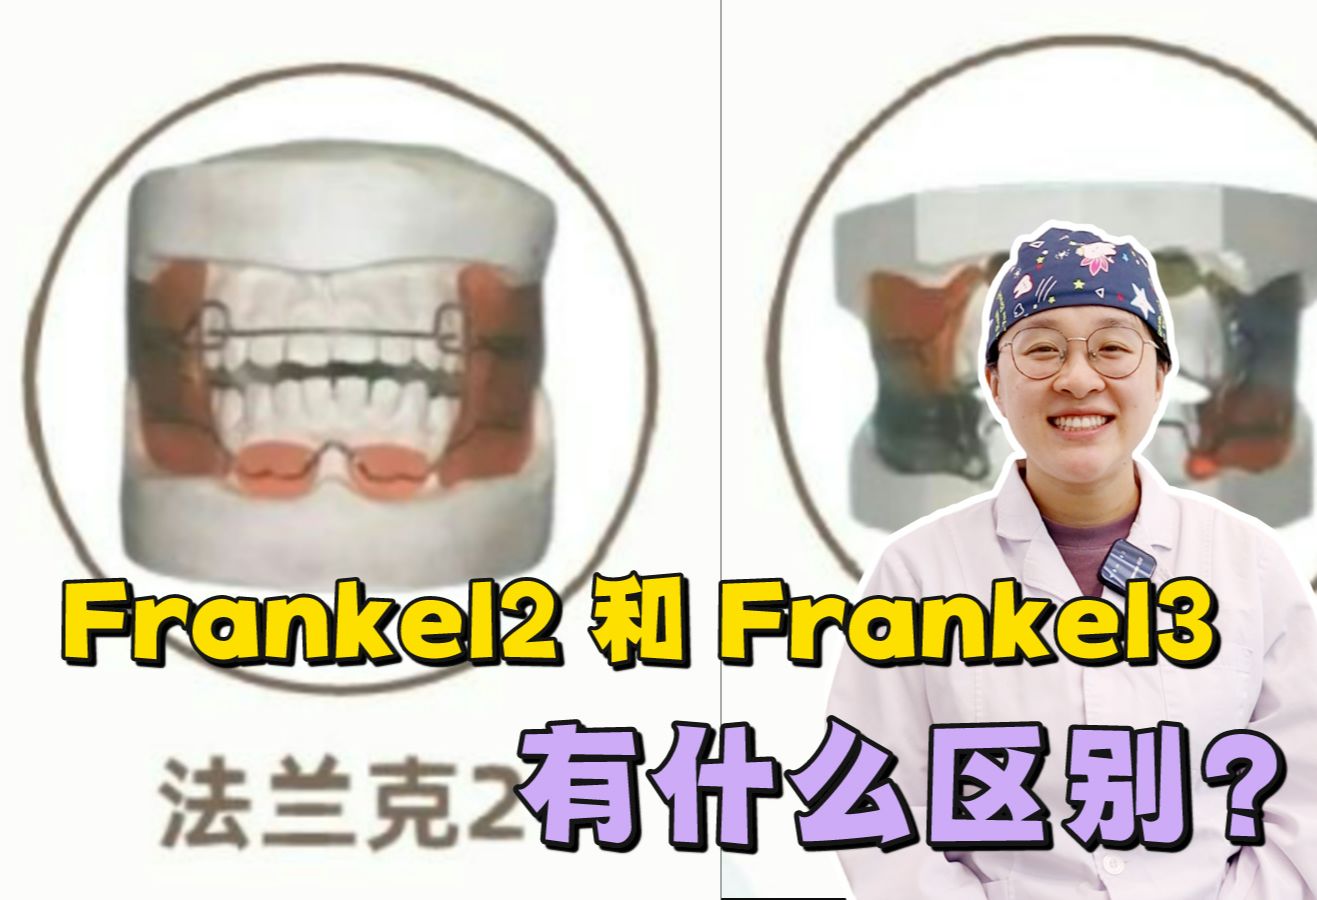 Frankel2和Frankel3有什么区别？